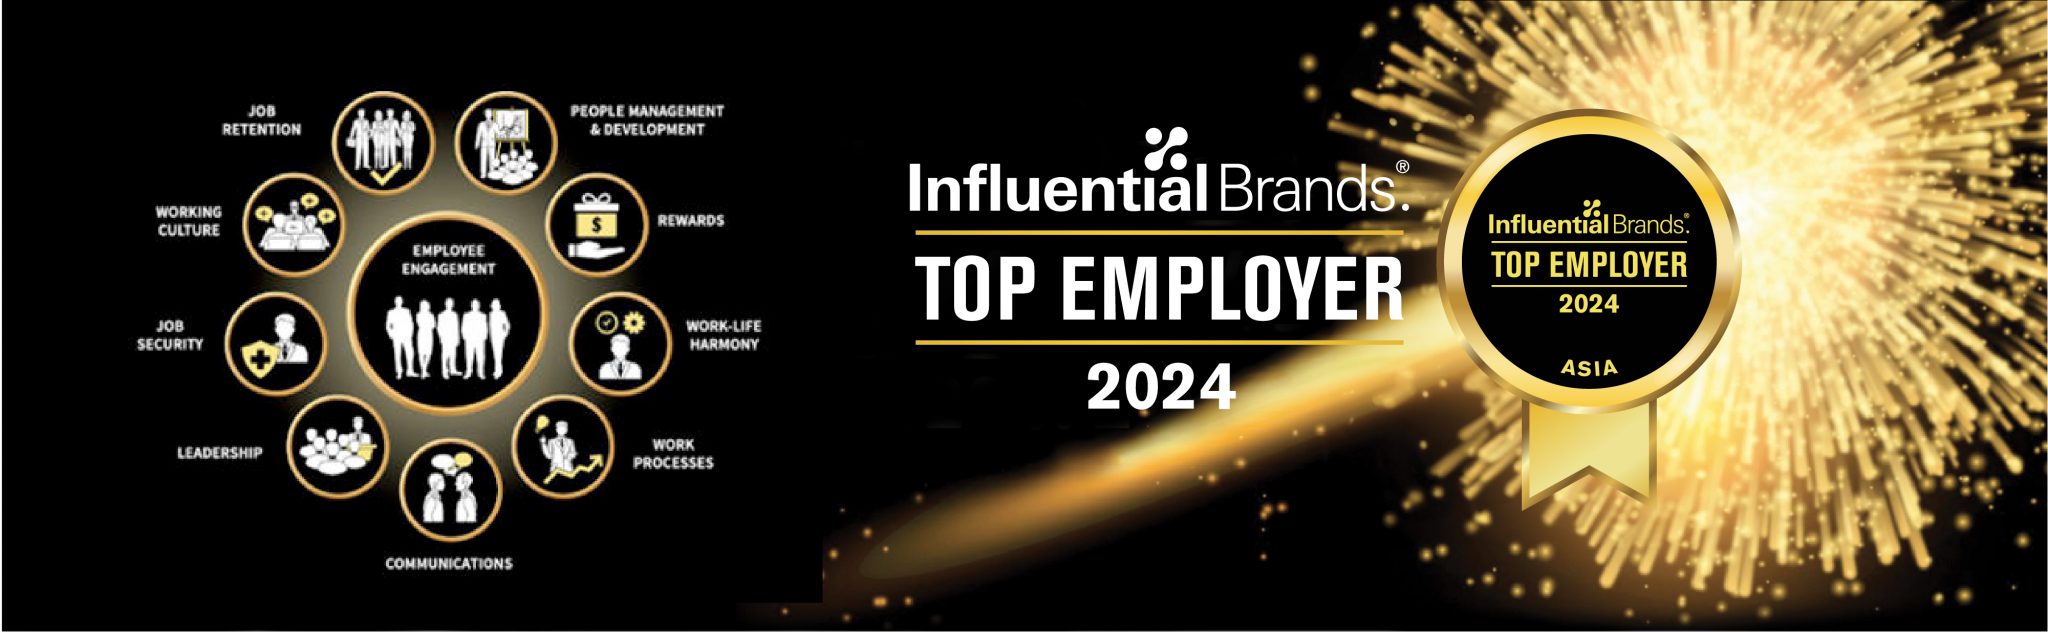 Top Employers 2024 Influential Brands